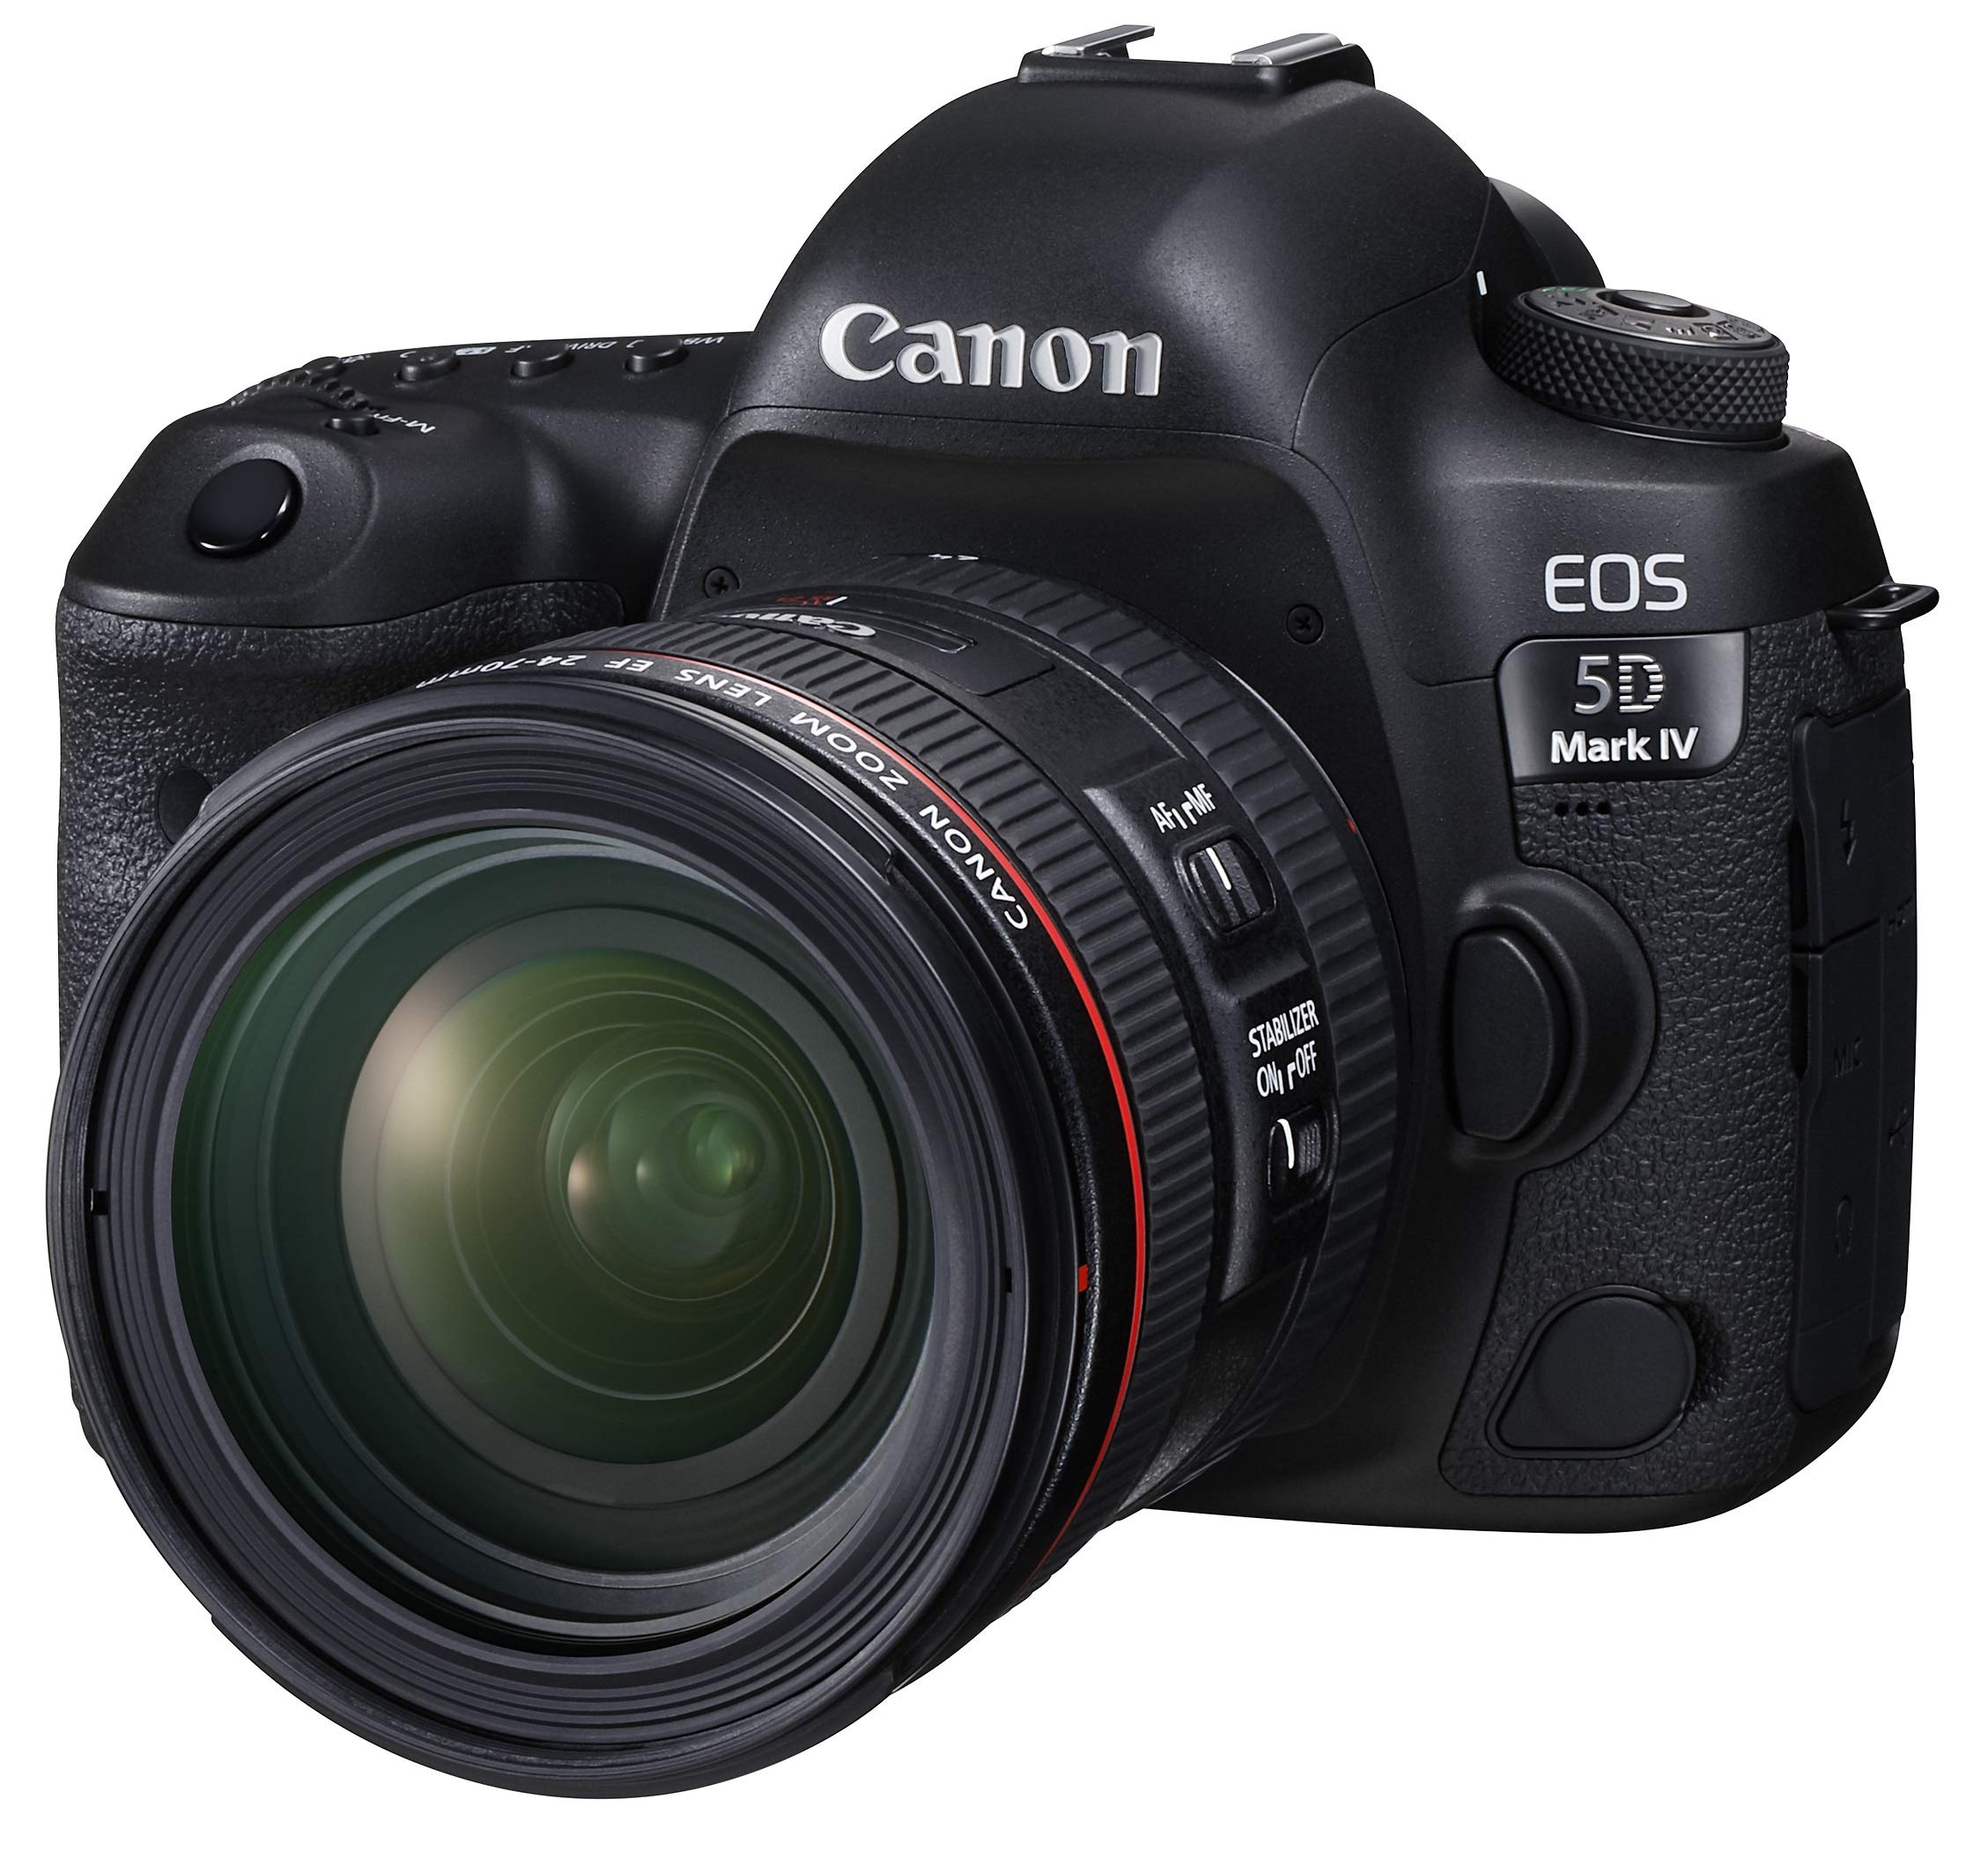 canon Canon デジタル一眼レフカメラEOS 5D Mark IV EF24-70L IS USM レンズキット EOS5DM4-2470ISLK